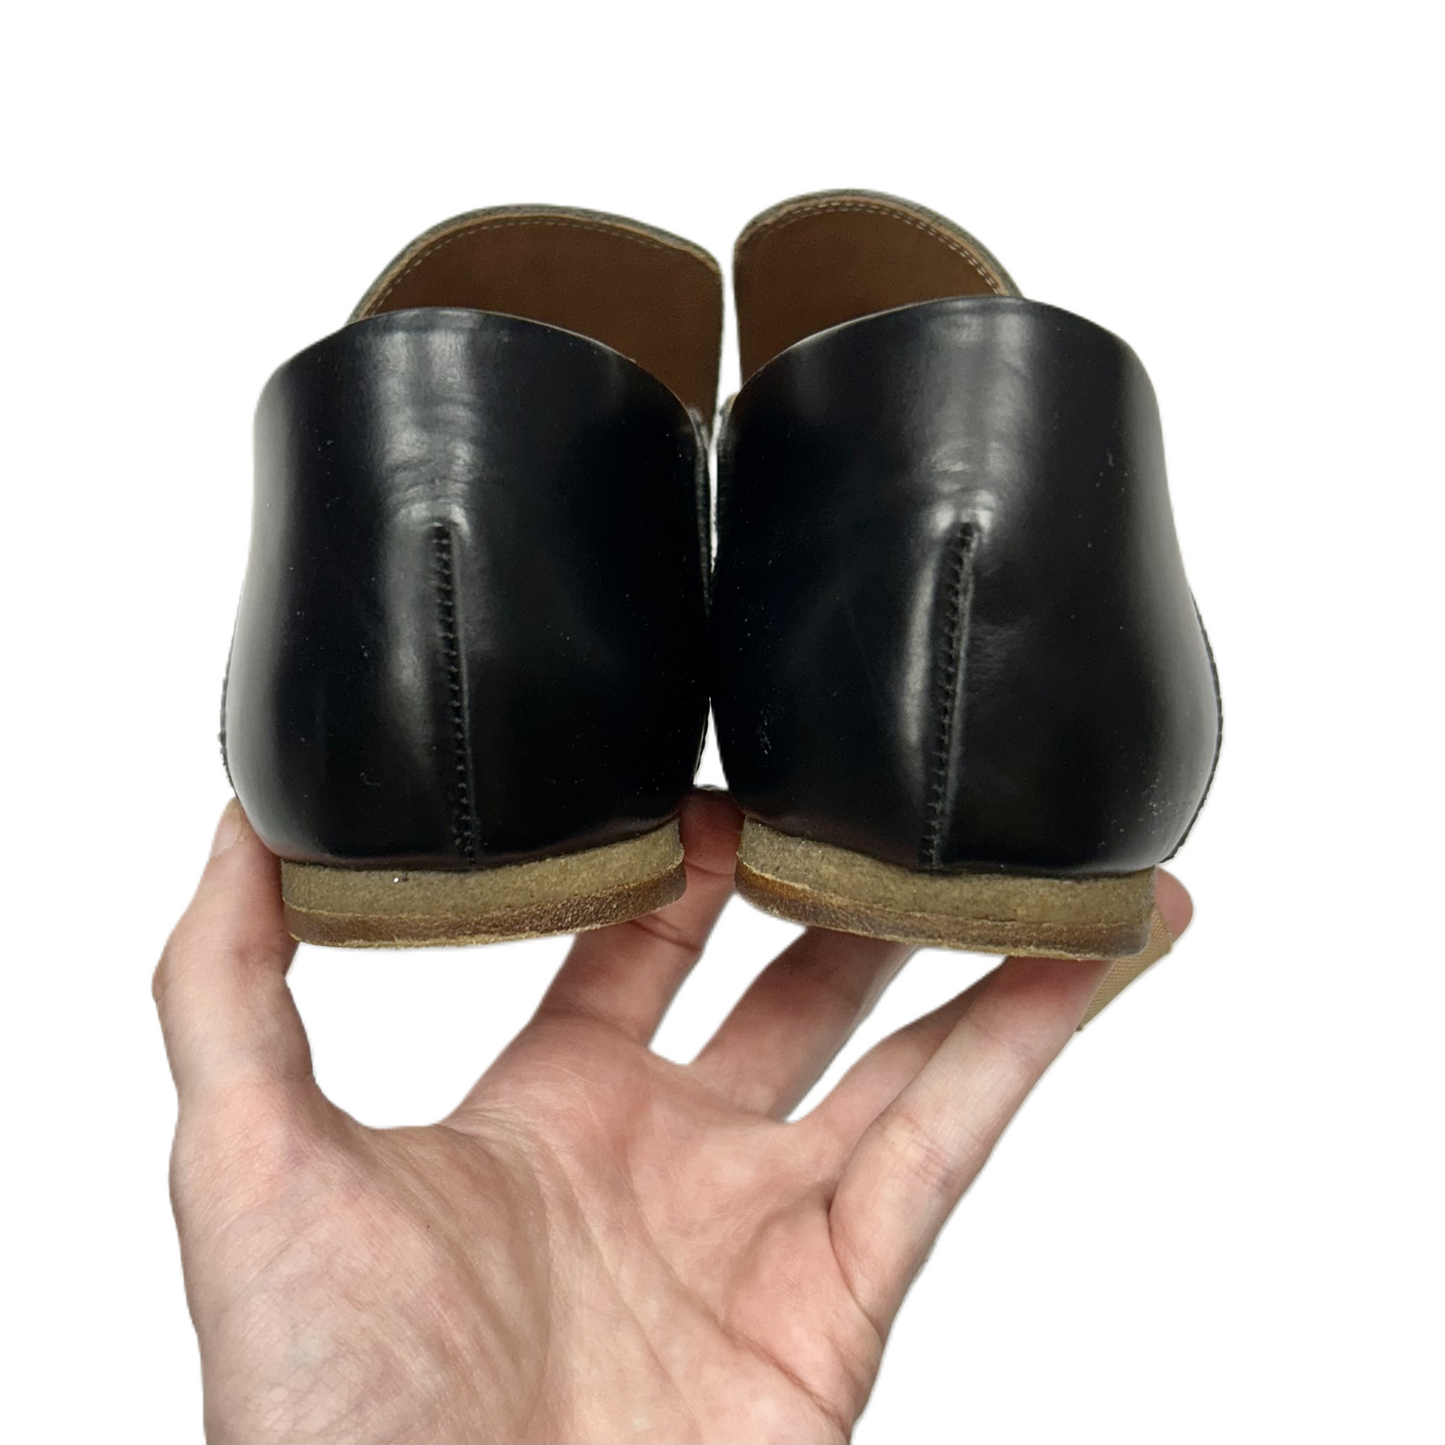 Black Shoes Designer By Dries Van Noten, Size: 10